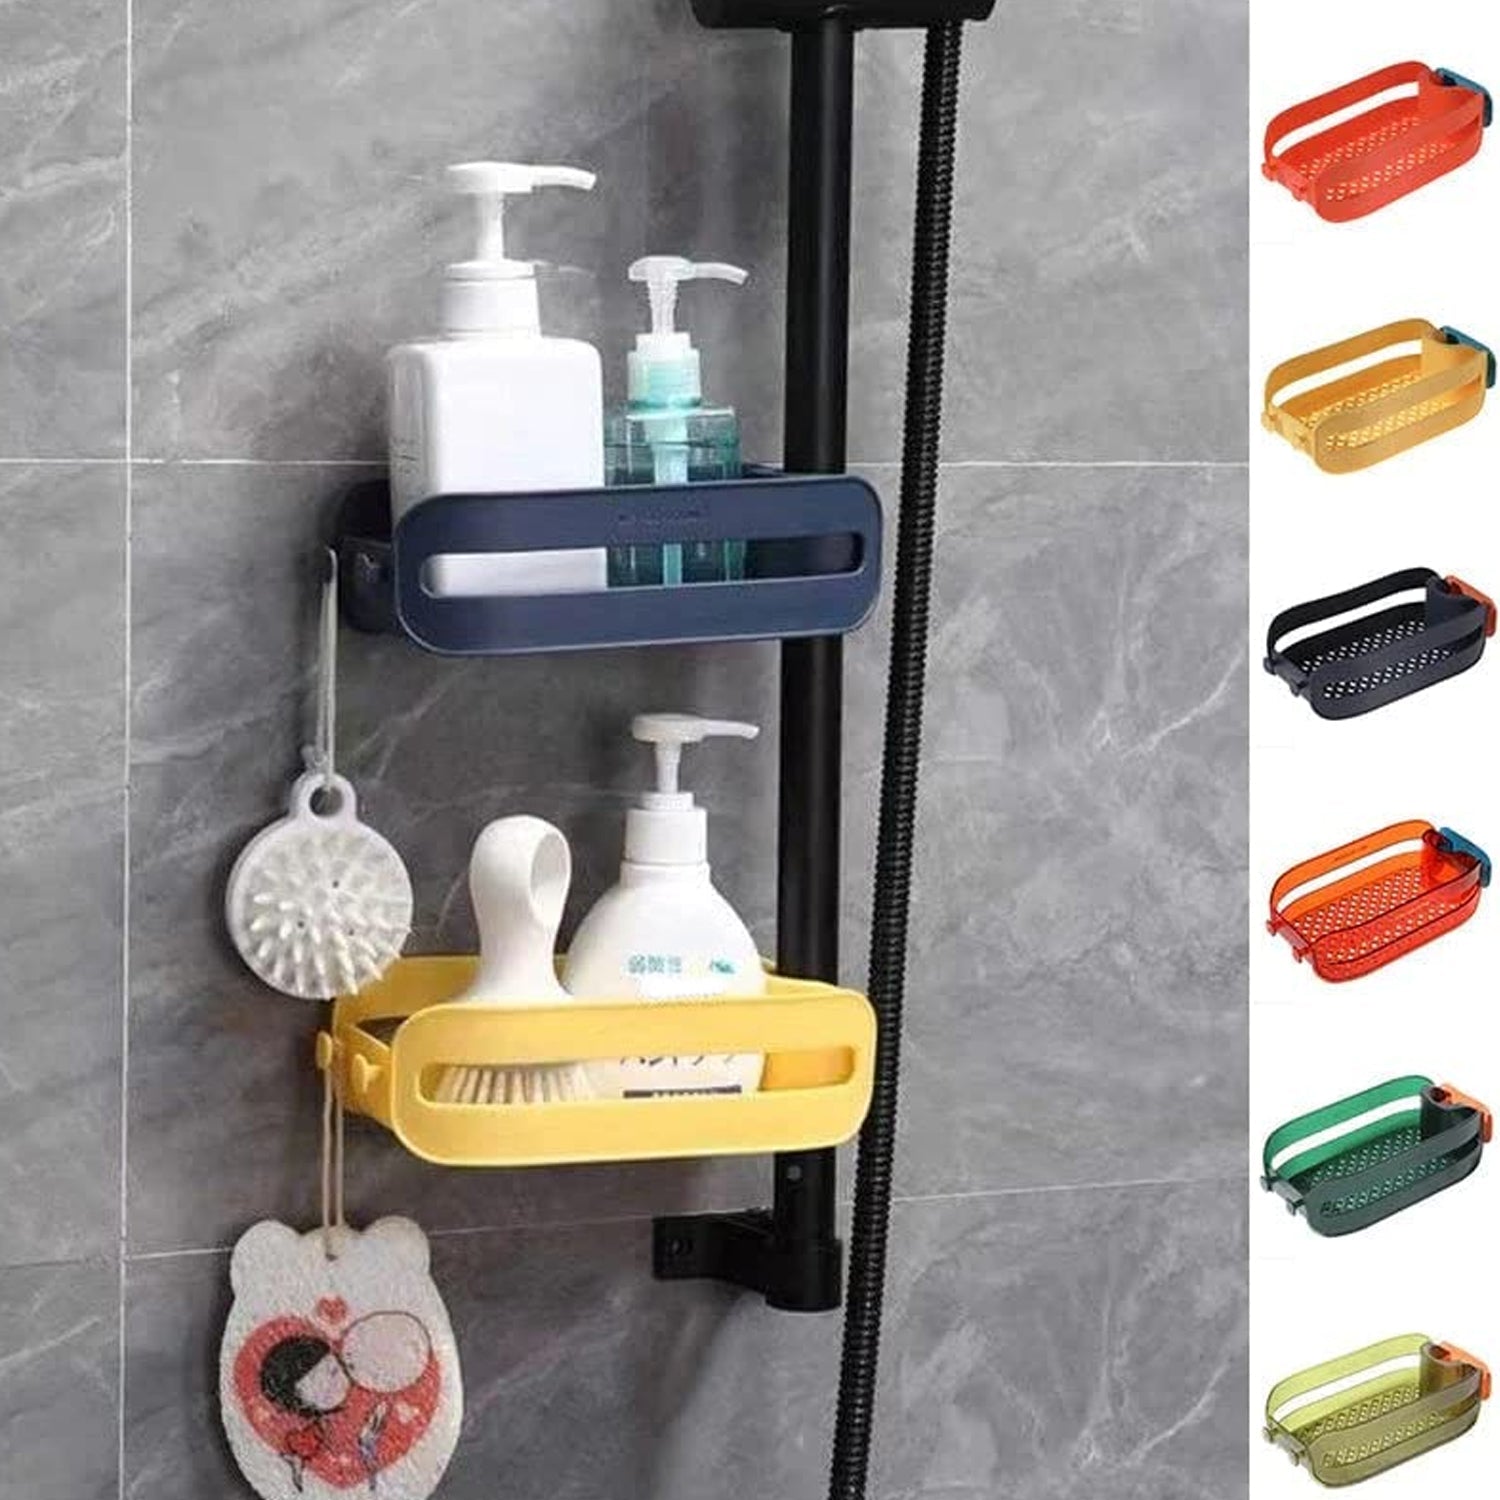 7073 Plastic Faucet Drain Basket Shelf - Drain Basket for Sink, Multipurpose Drain Basket Sink-Strainer Hangs on Faucet for All Sinks. 